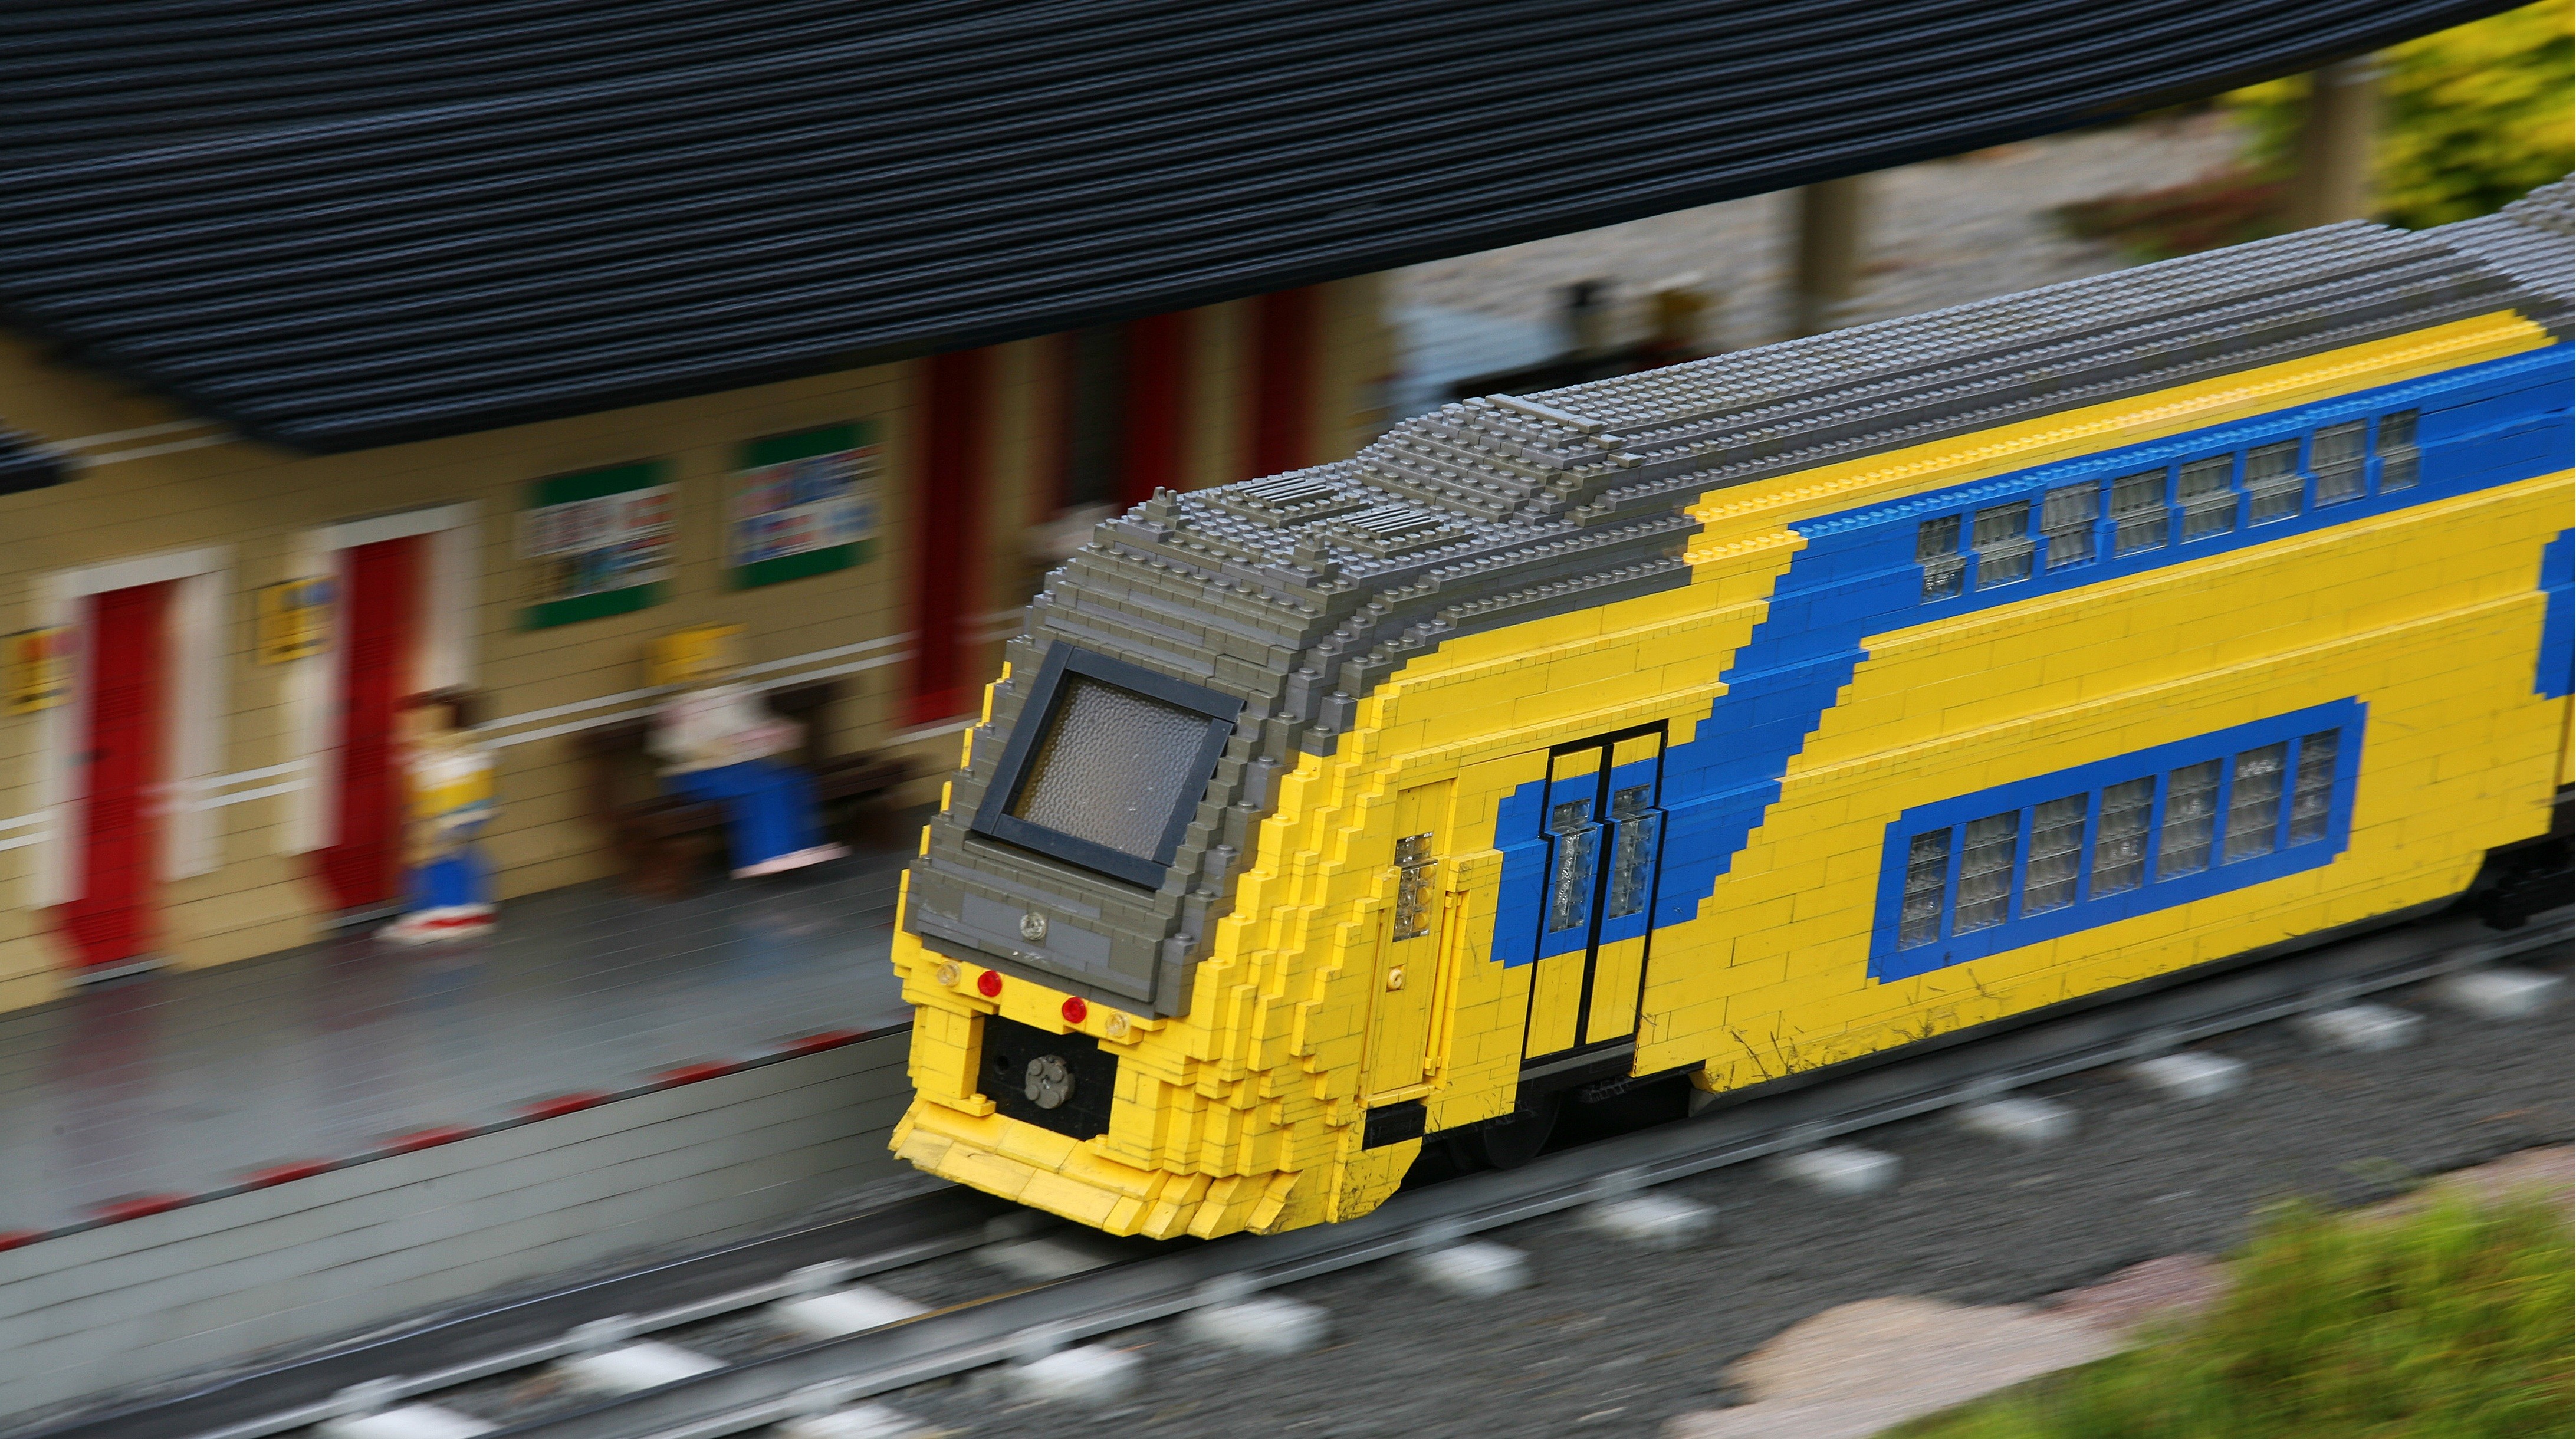 General 4368x2440 LEGO toys bricks train diesel locomotive train station railway blurred motion blur vehicle